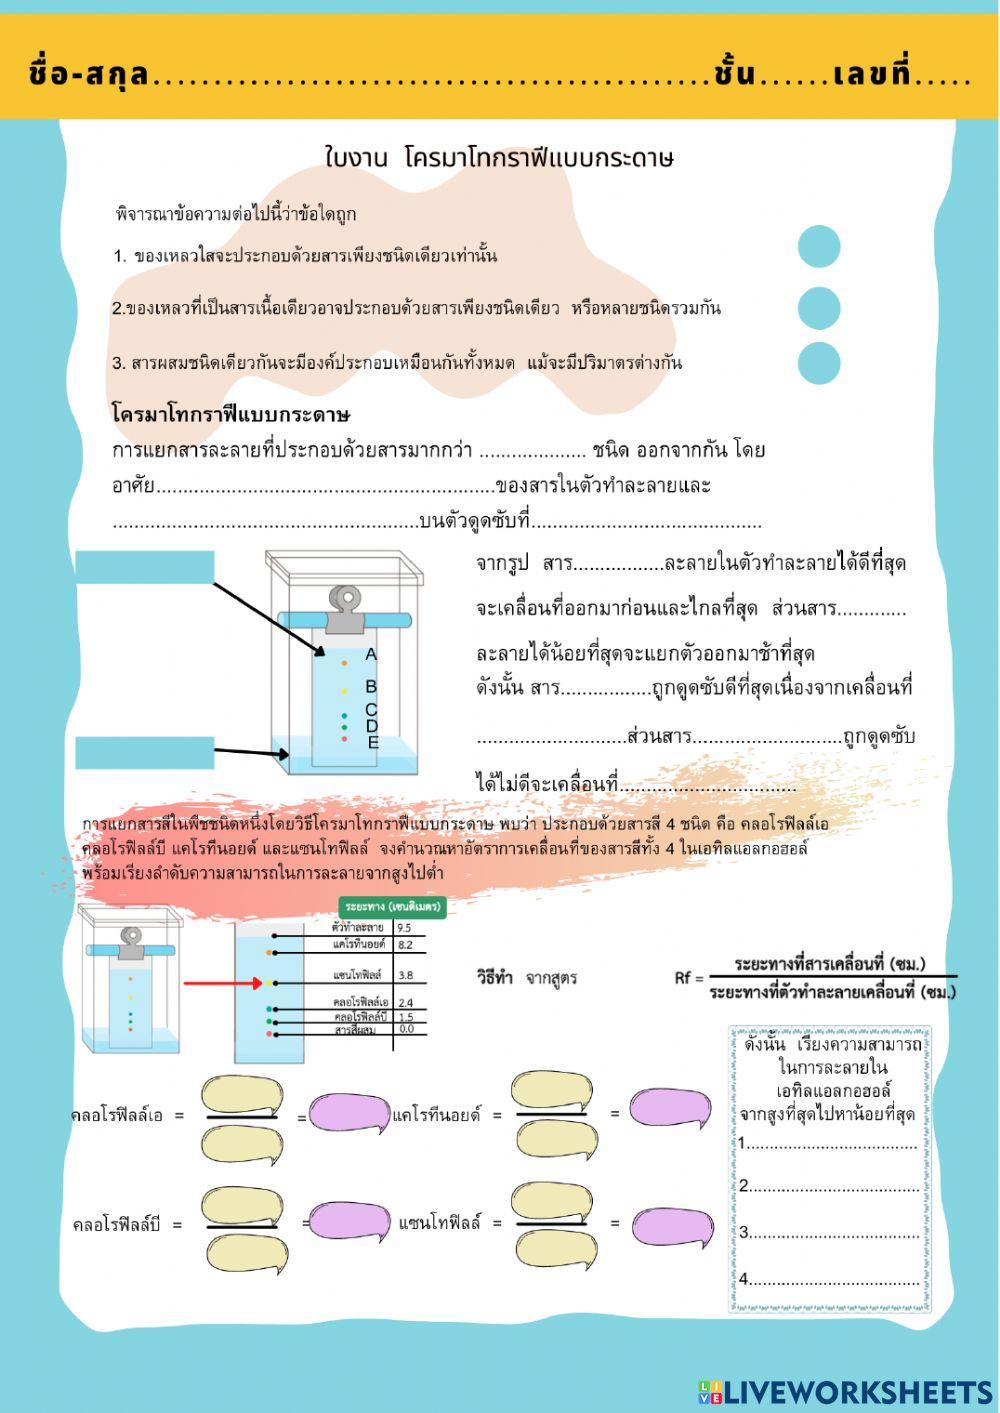 Purifacation chromatography